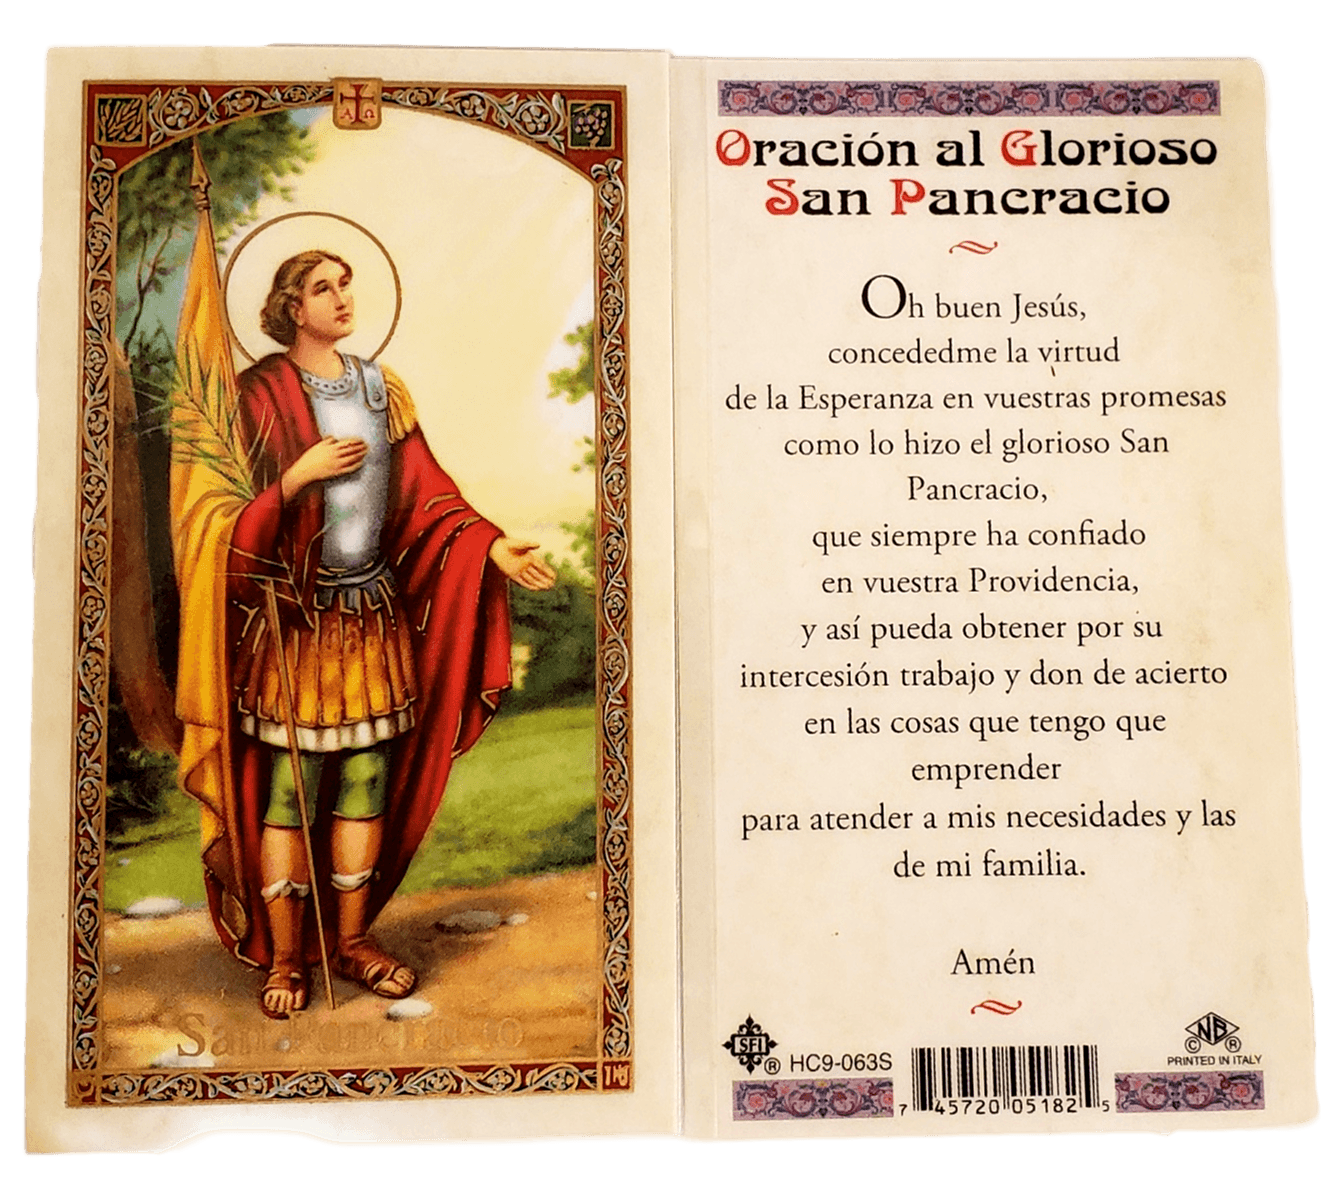 Prayer Card Oracion Al Glorioso San Pancracio SPANISH Laminated HC9-063S - Ysleta Mission Gift Shop- VOTED El Paso's Best Gift Shop